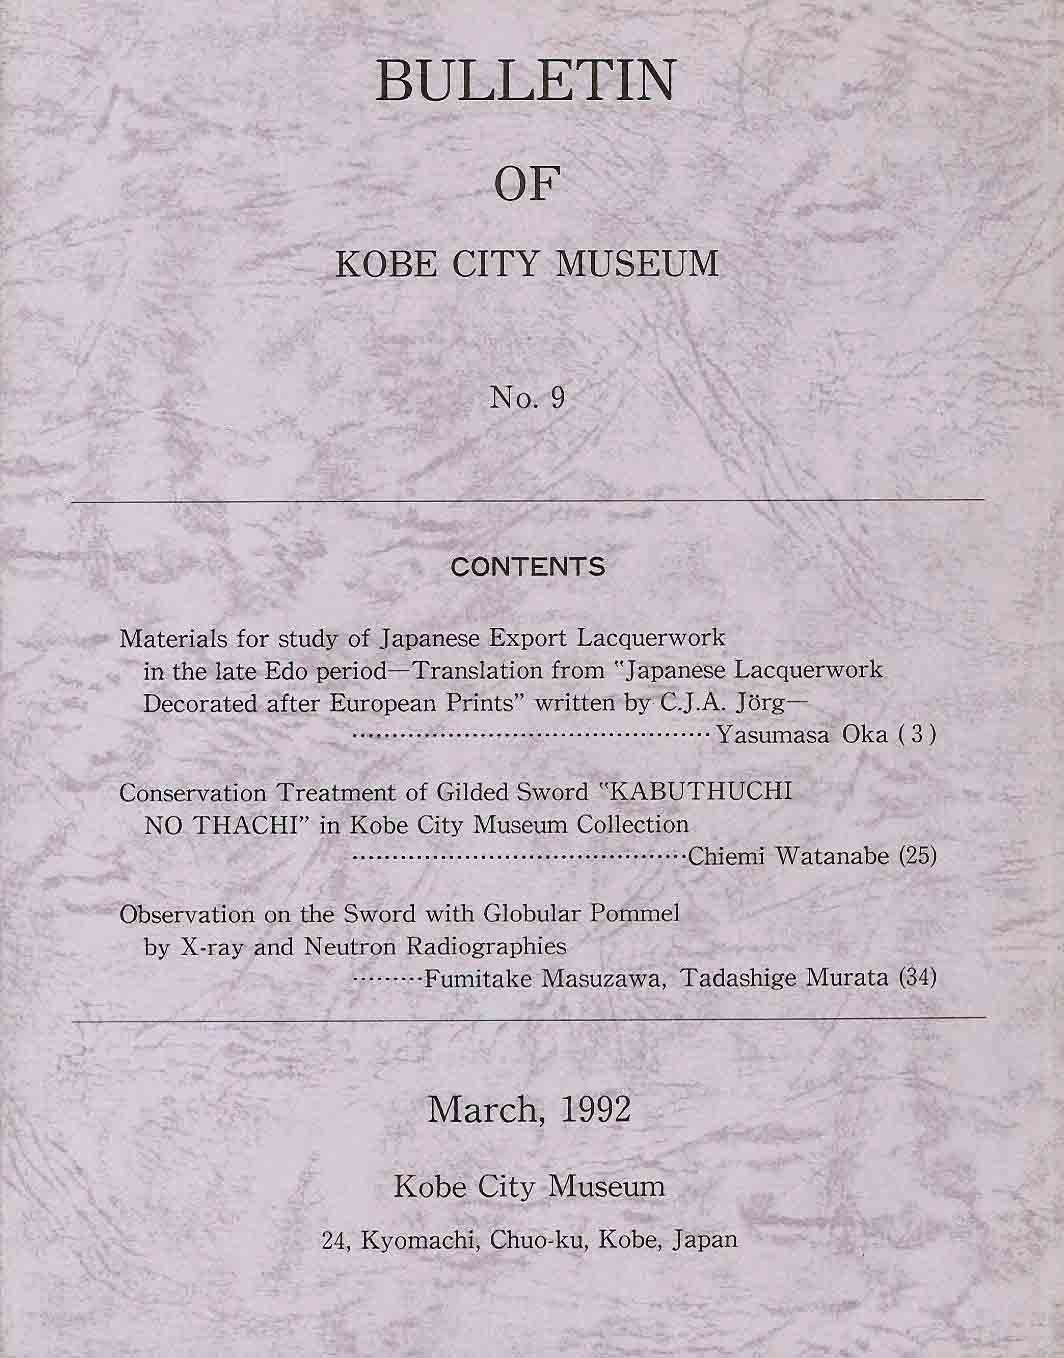 Jorg, C.J.A. et al - Bulletin of Kobe City Museum No. 9